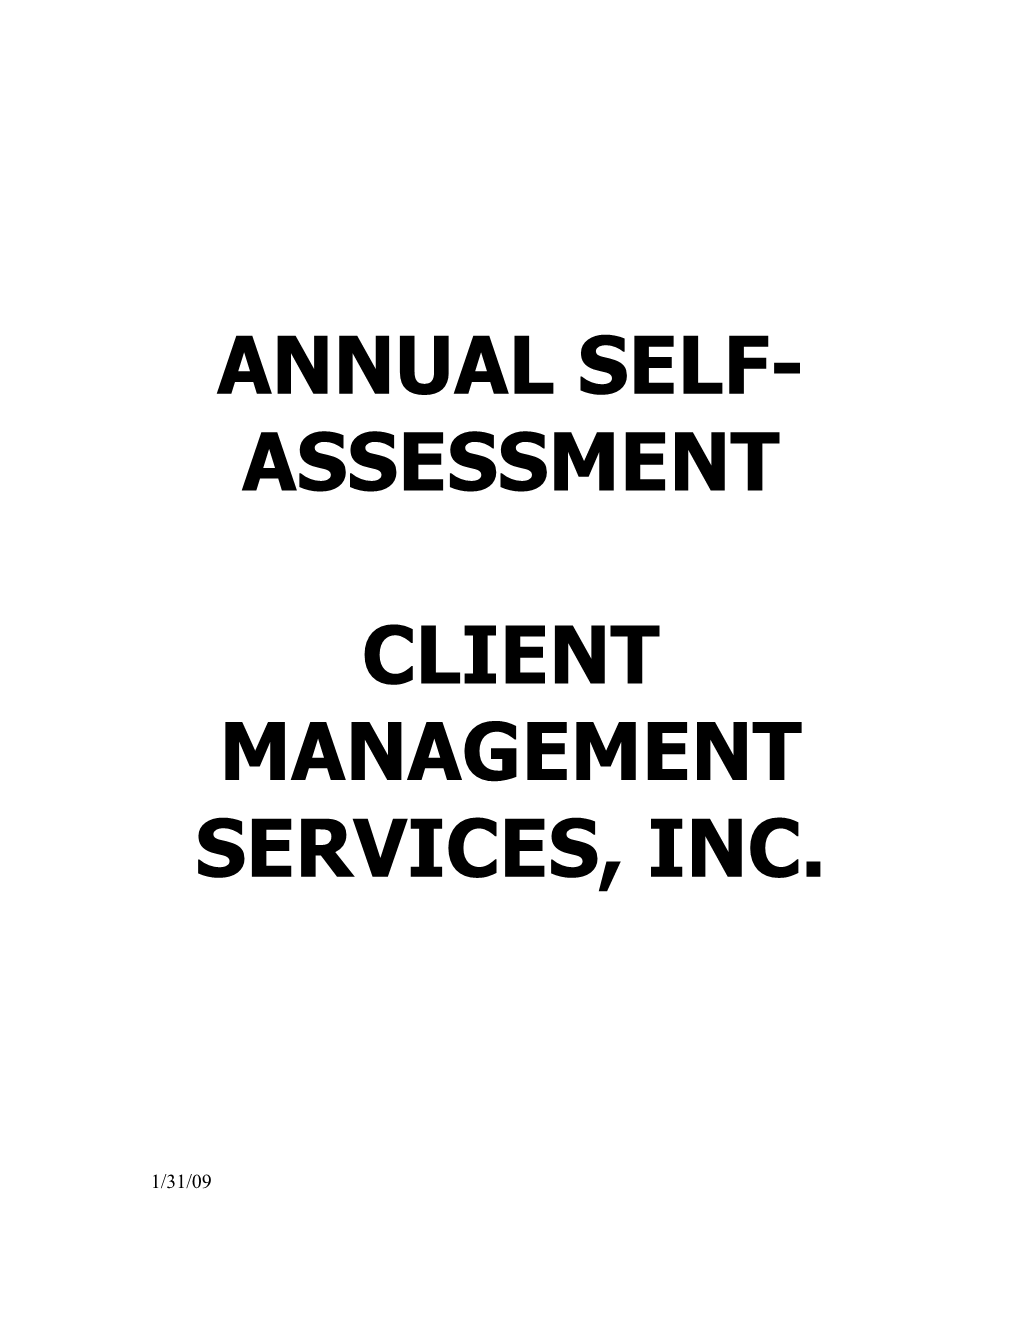 Annual Self-Assessment - Client Management Services, Inc